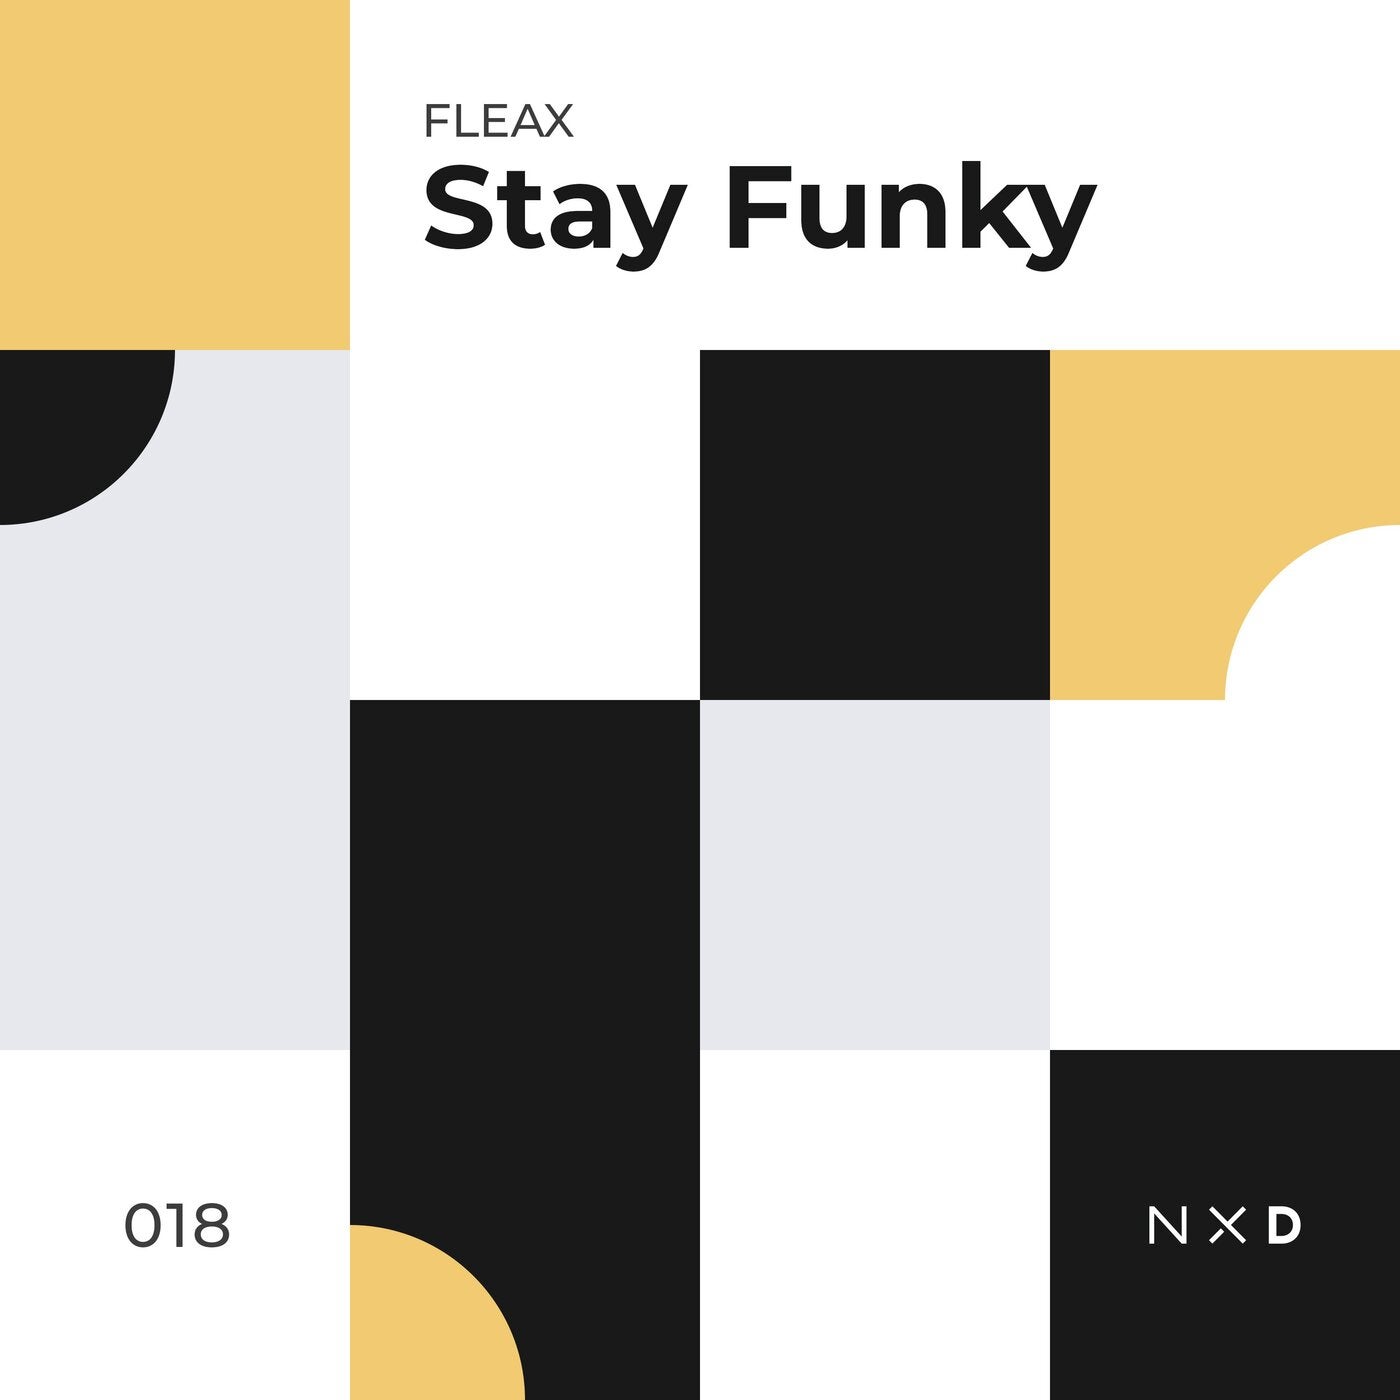 Stay Funky